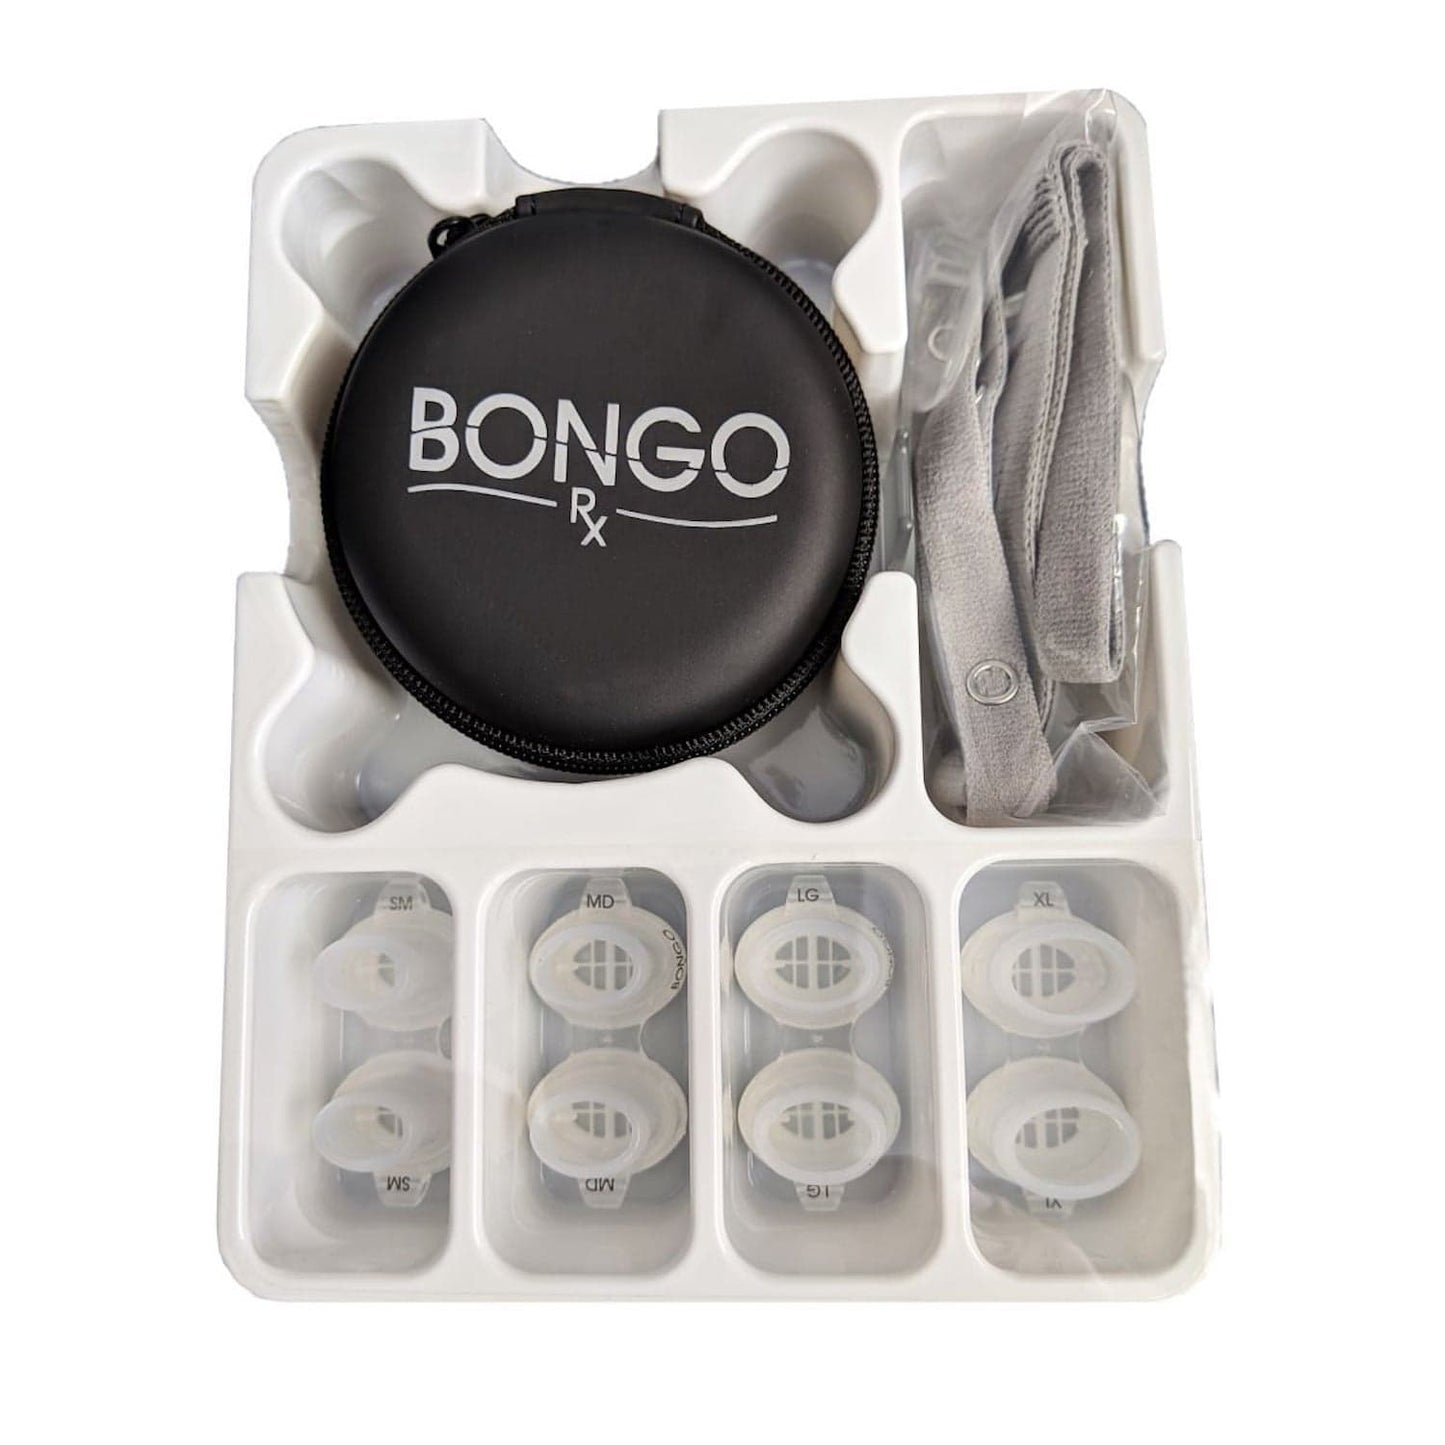 Starter Kit Bongo Rx - Sleep Therapy Device, box open